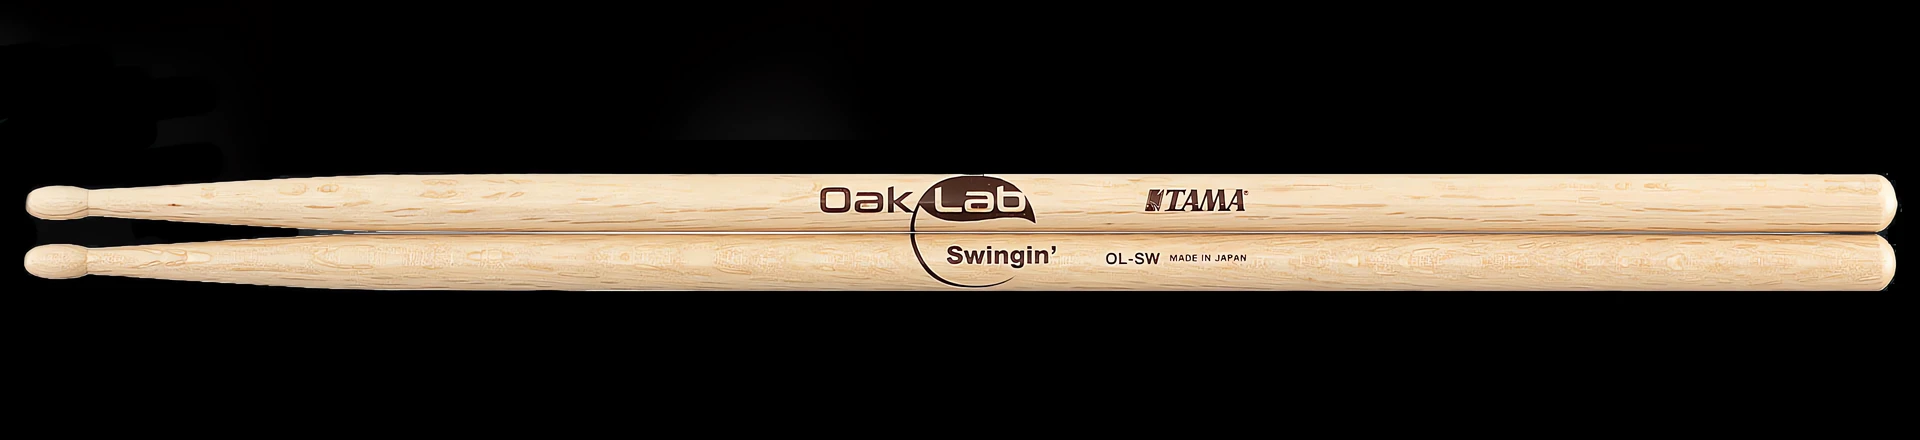 Tama: Nowa seria pałek perkusyjnych Oak lab